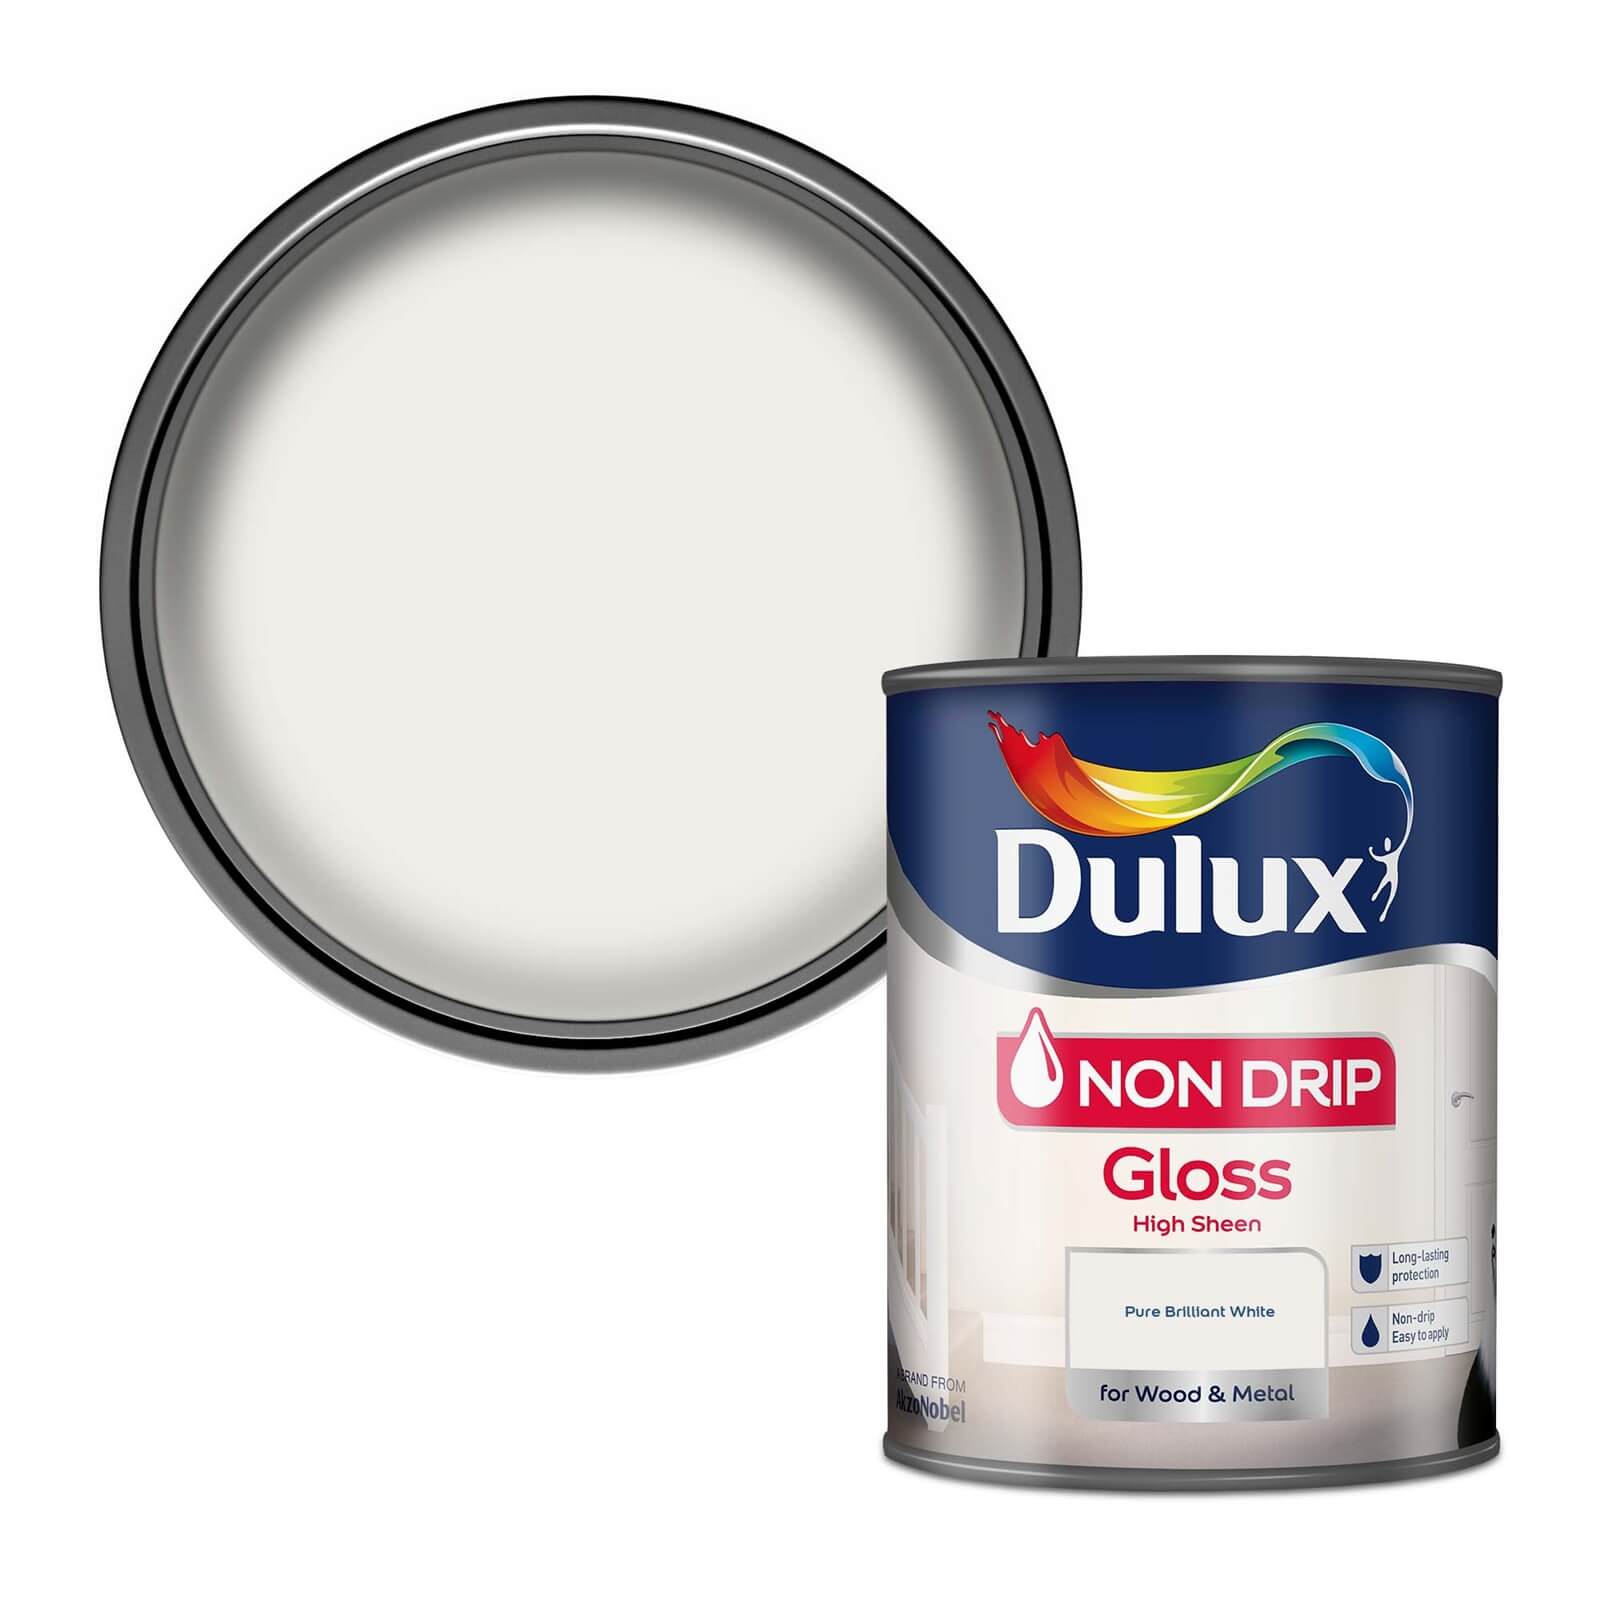 Photo of Dulux Pure Brilliant White - Non Drip Gloss Paint - 750ml